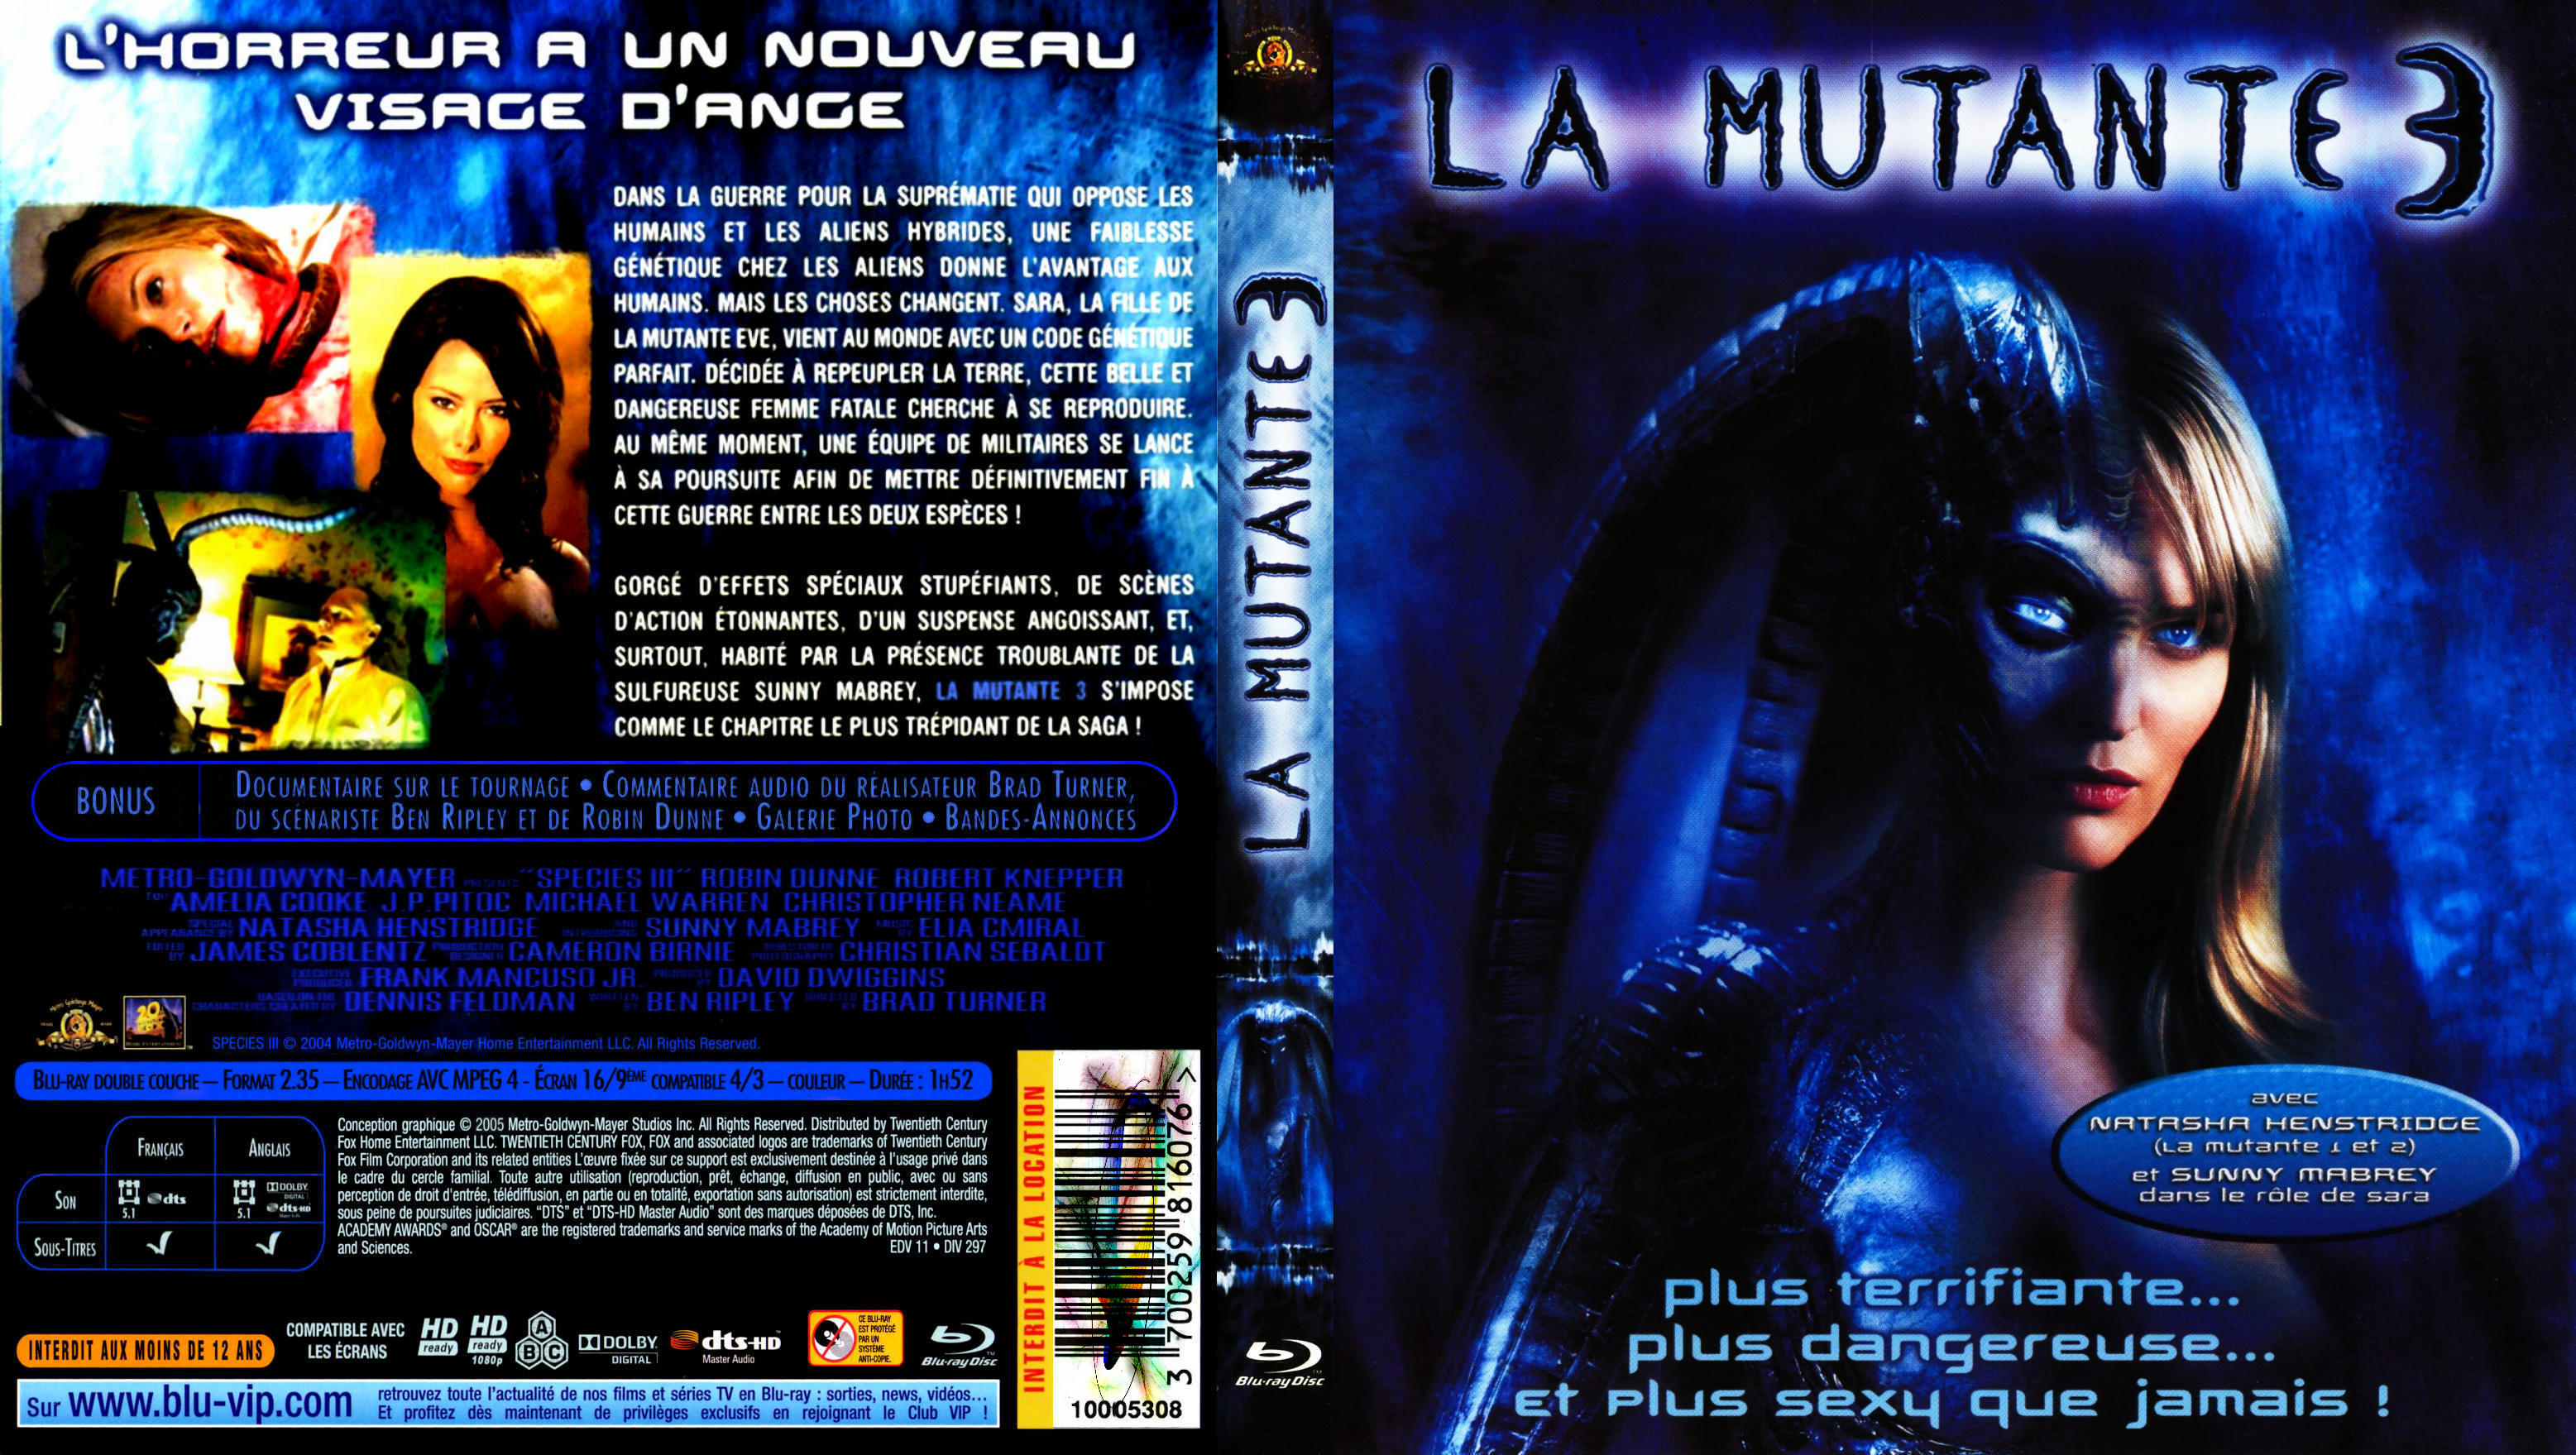 Jaquette DVD La mutante 3 custom (BLU-RAY)